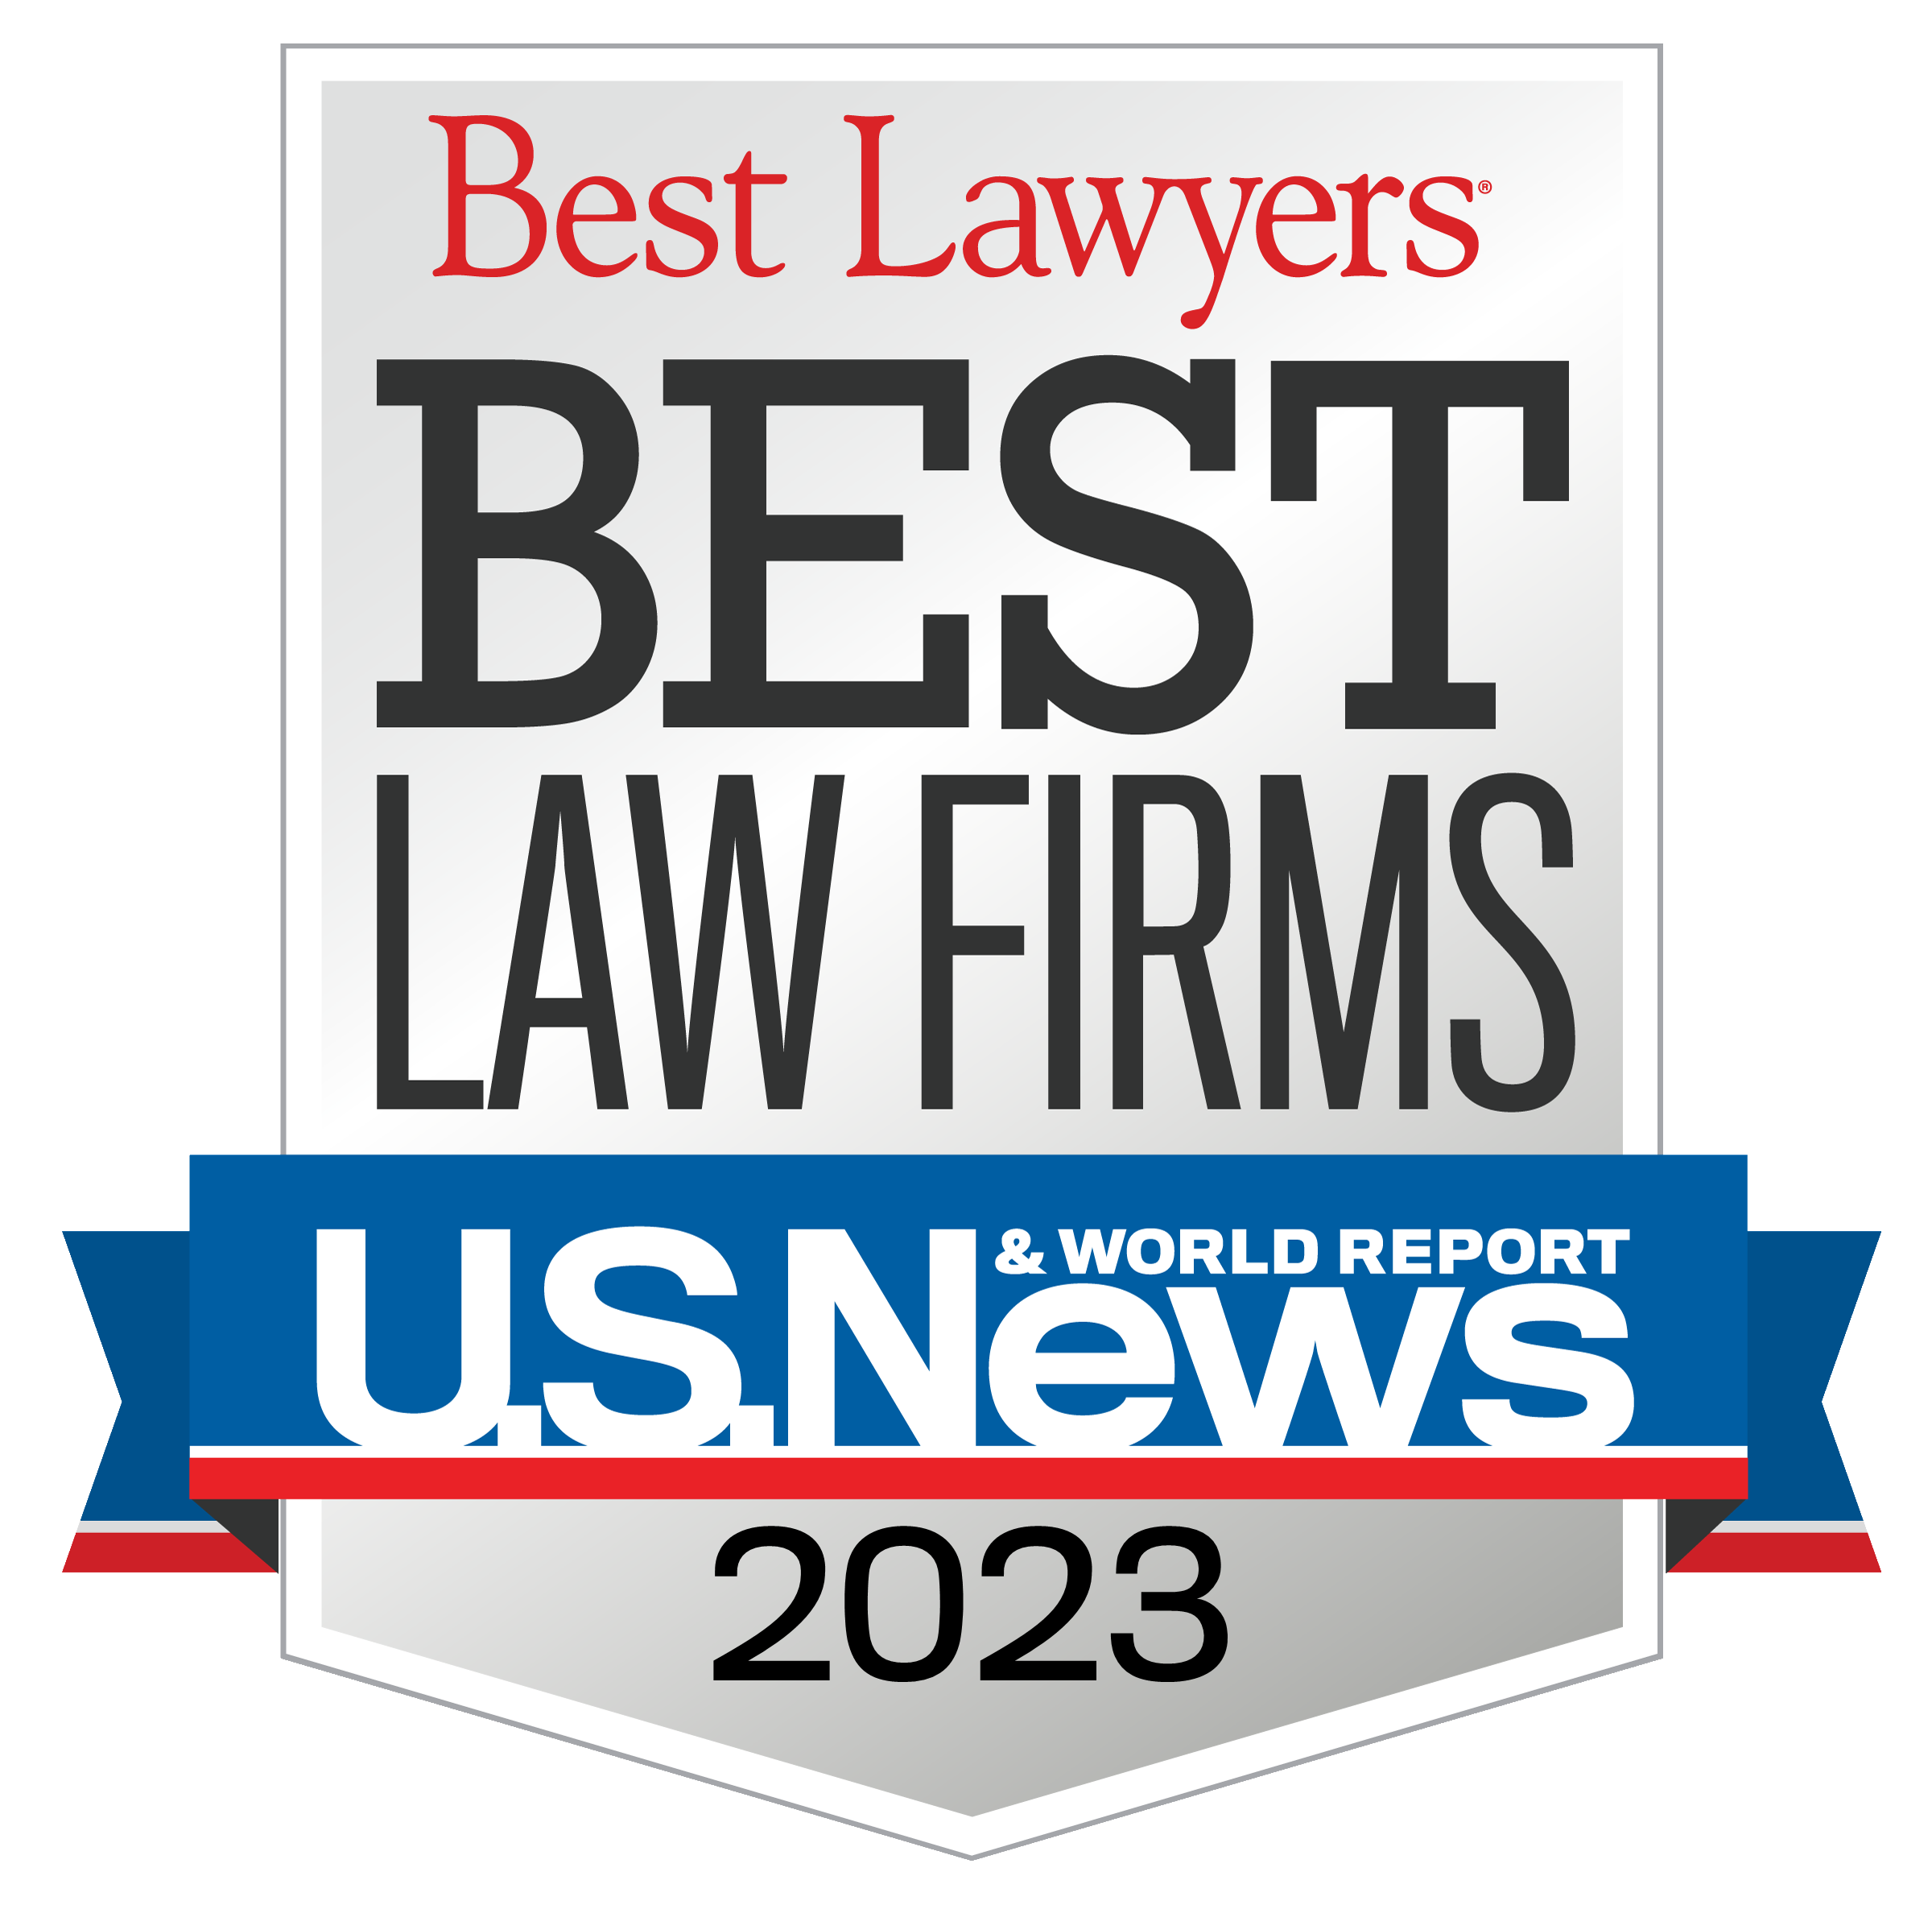 Best Lawyers - Best Law Firms - U.S. News & World Report 2022